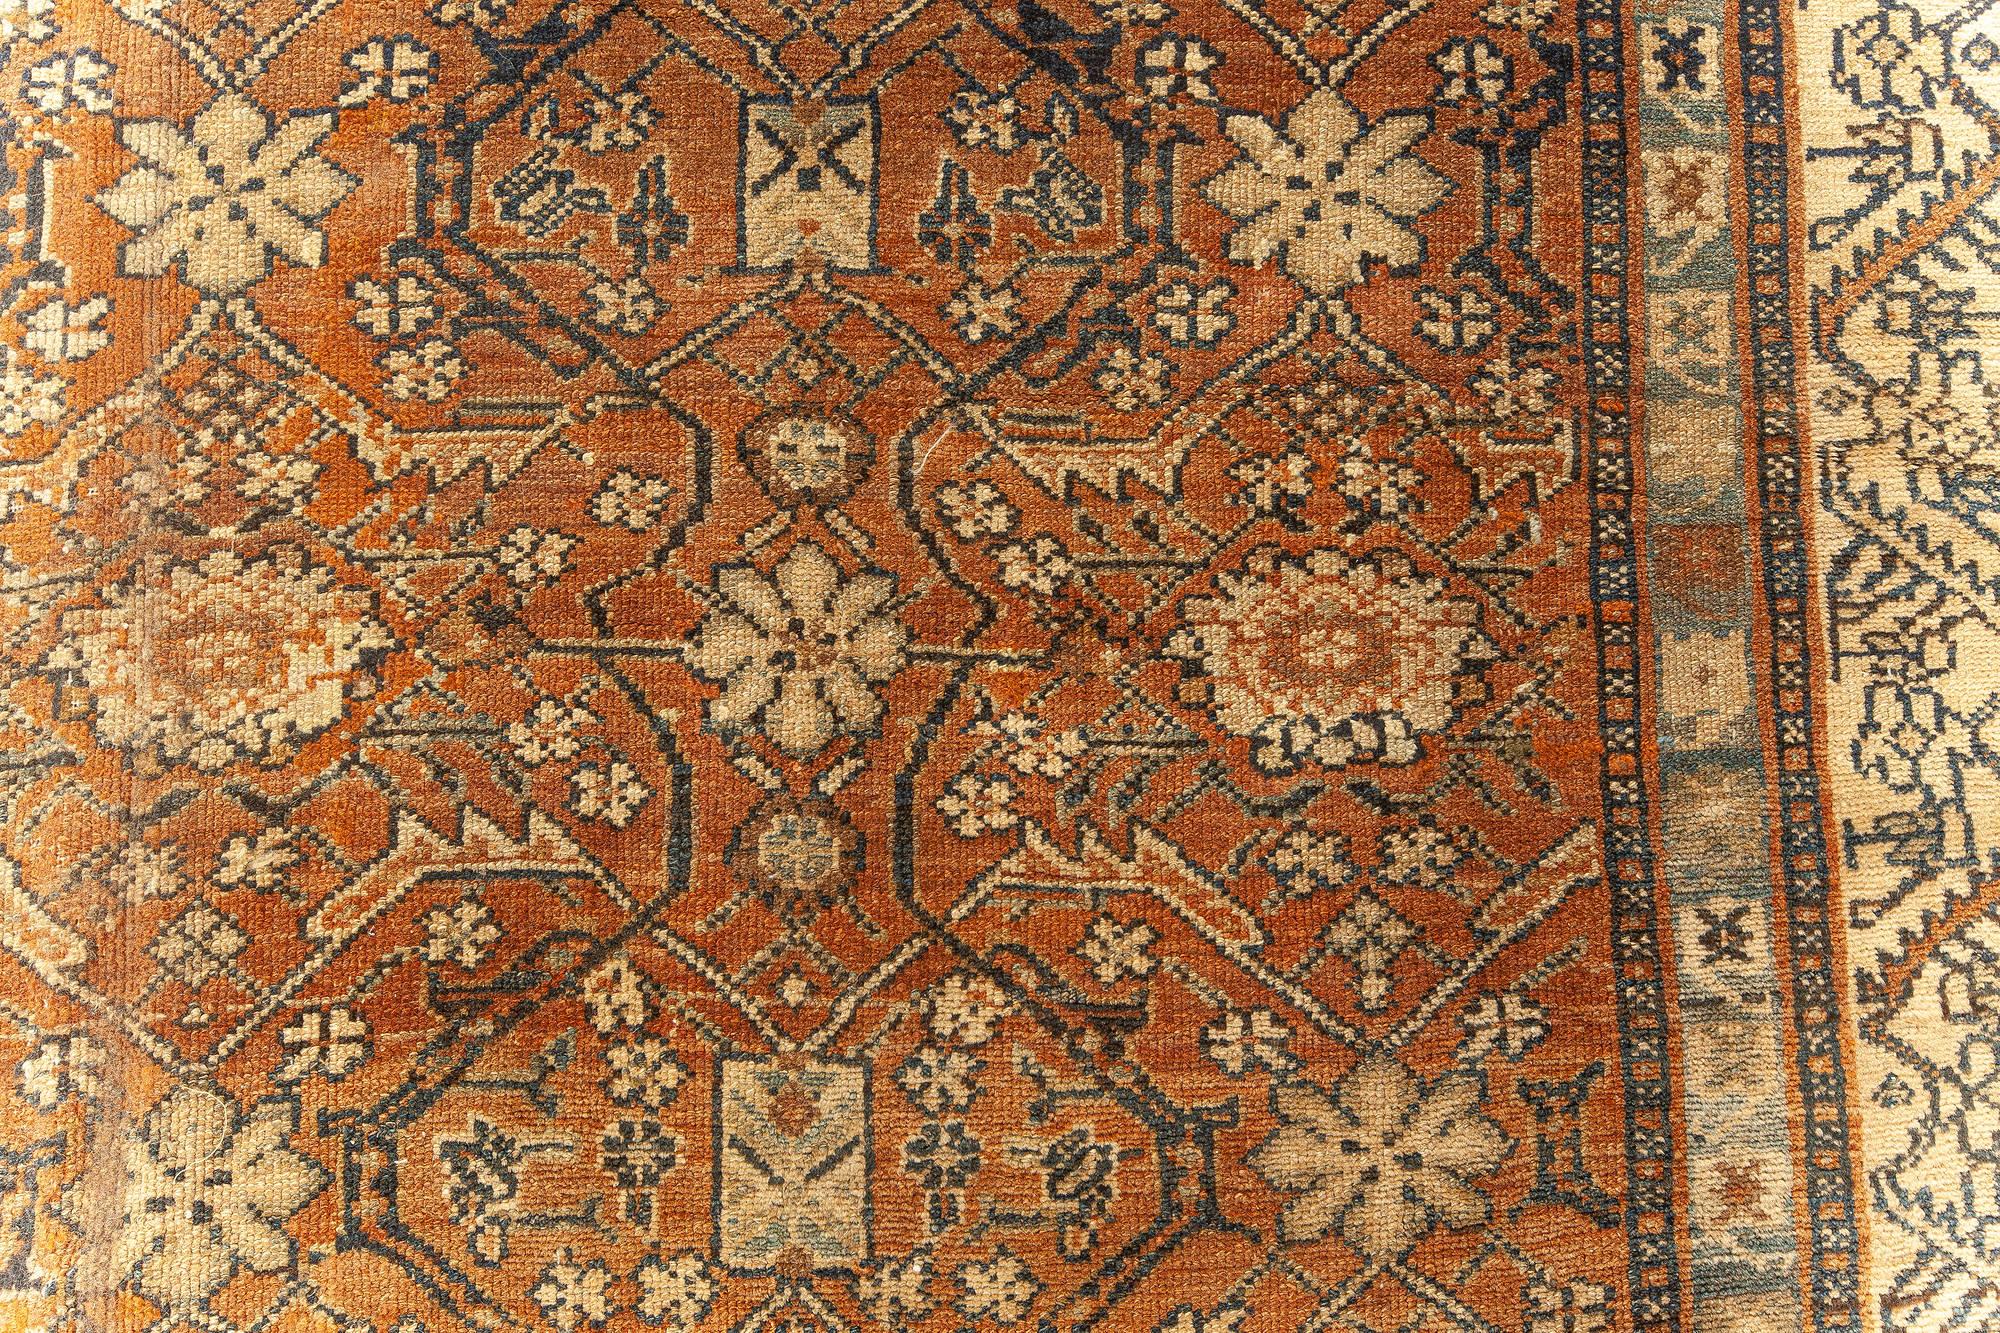 Large antique Persian Bibikabad brown handmade wool rug
Size: 14'4